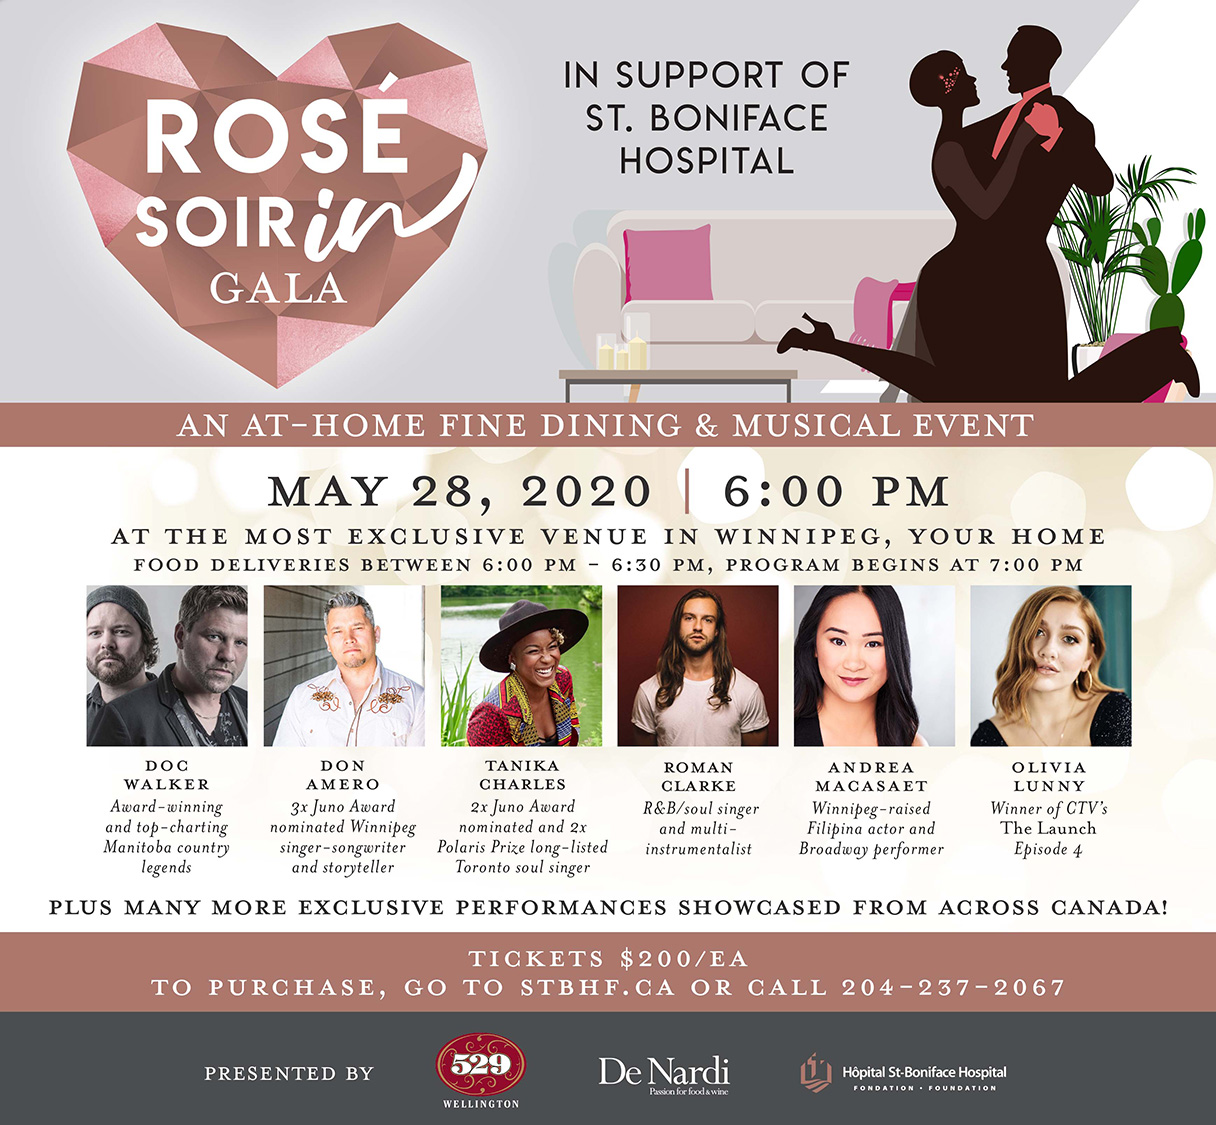 Rosé Soirin Gala event invite - "In Support of St. Boniface Hospital"